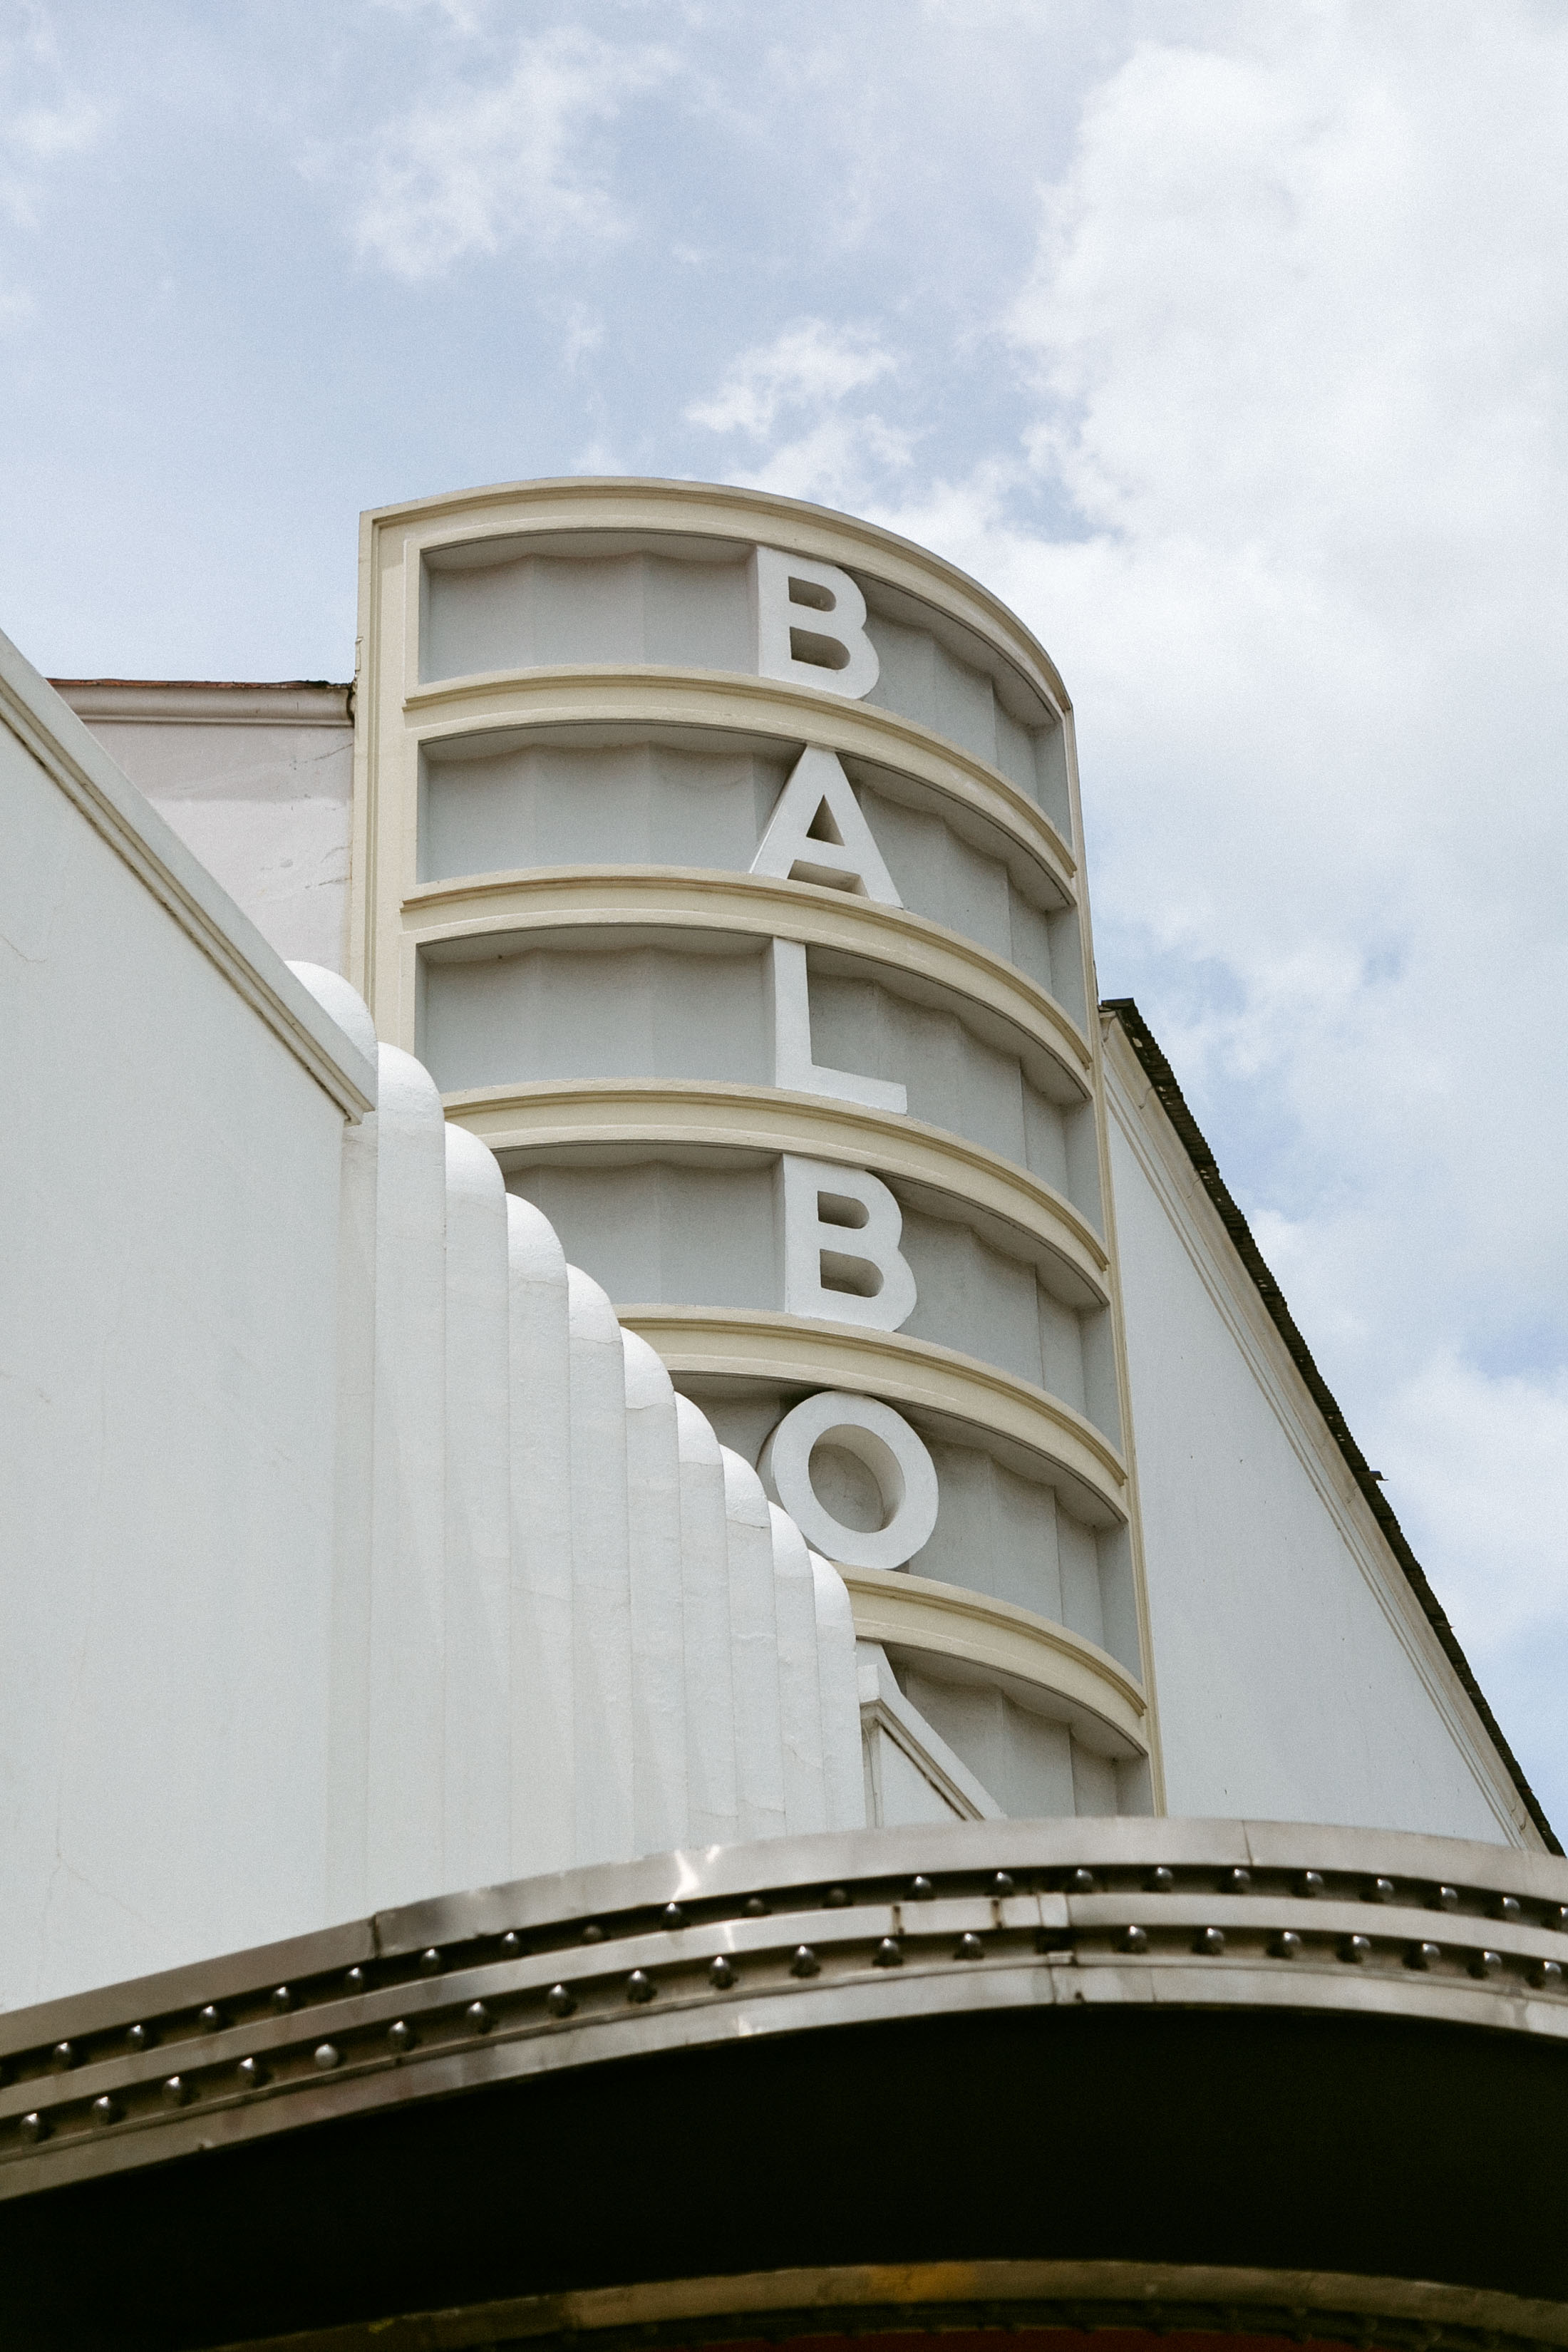 Balboa Theater Art Deco sign in Panama City, Panama